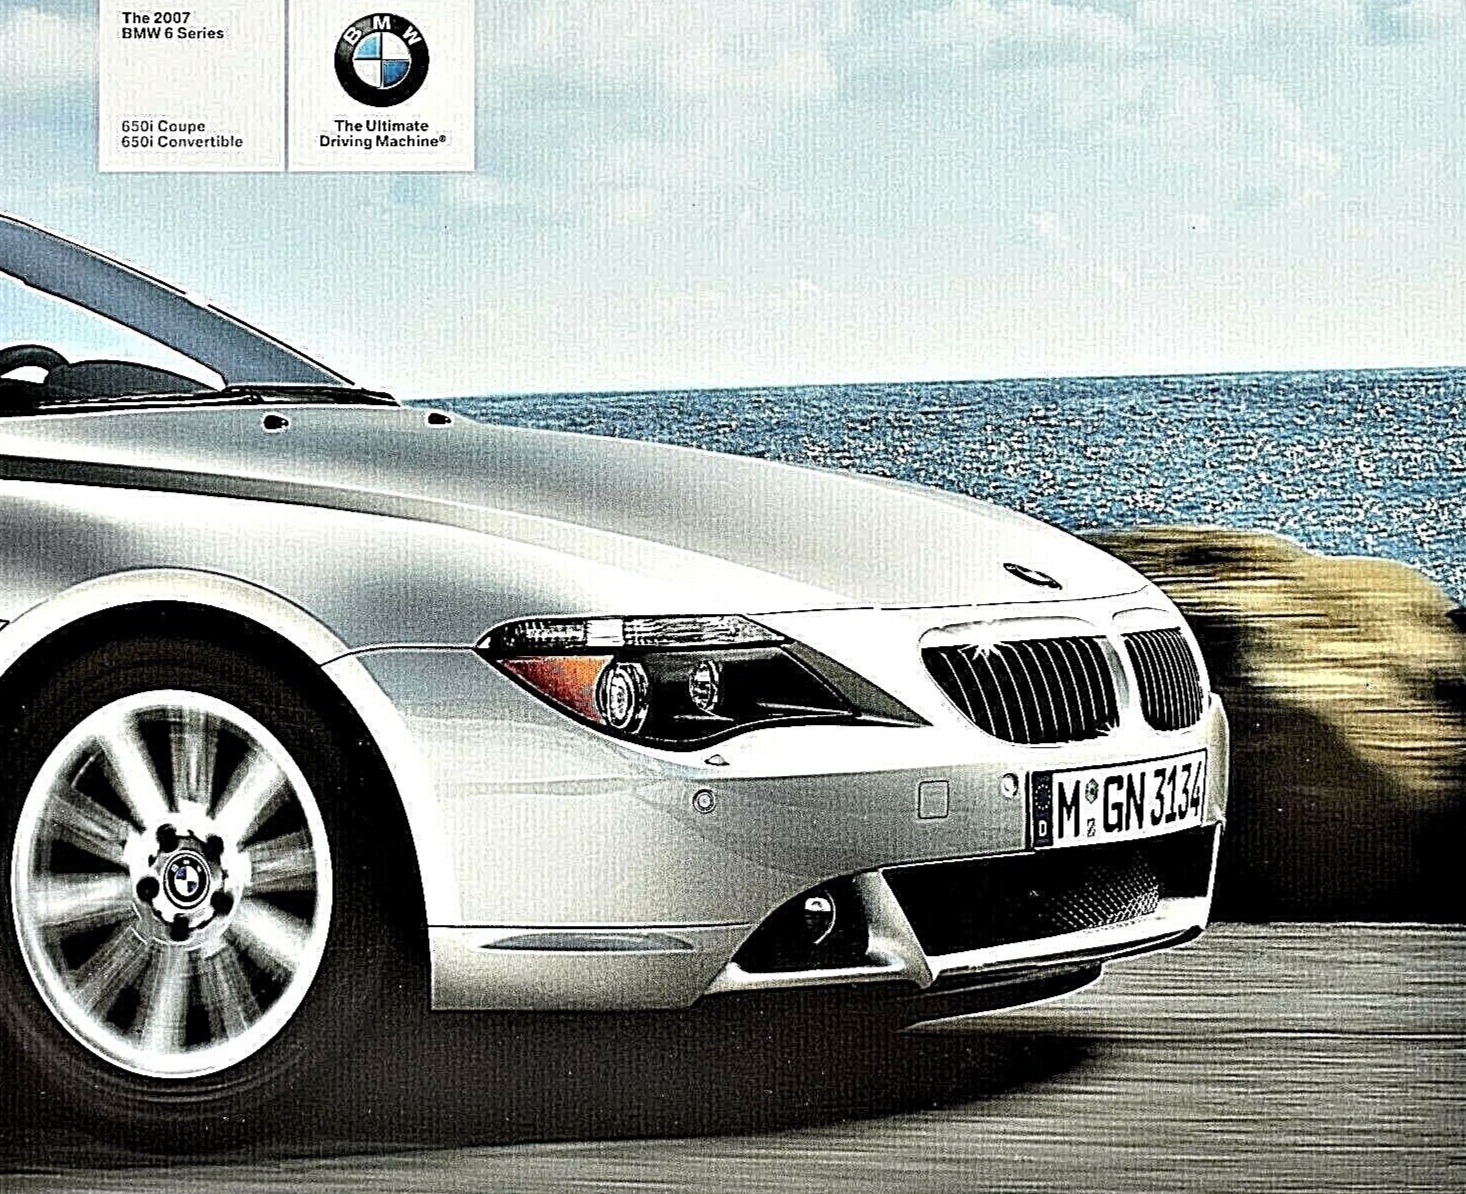 2007 BMW 6 SERIES PRESTIGE SALES BROCHURE CATALOG ~ 68 PAGES